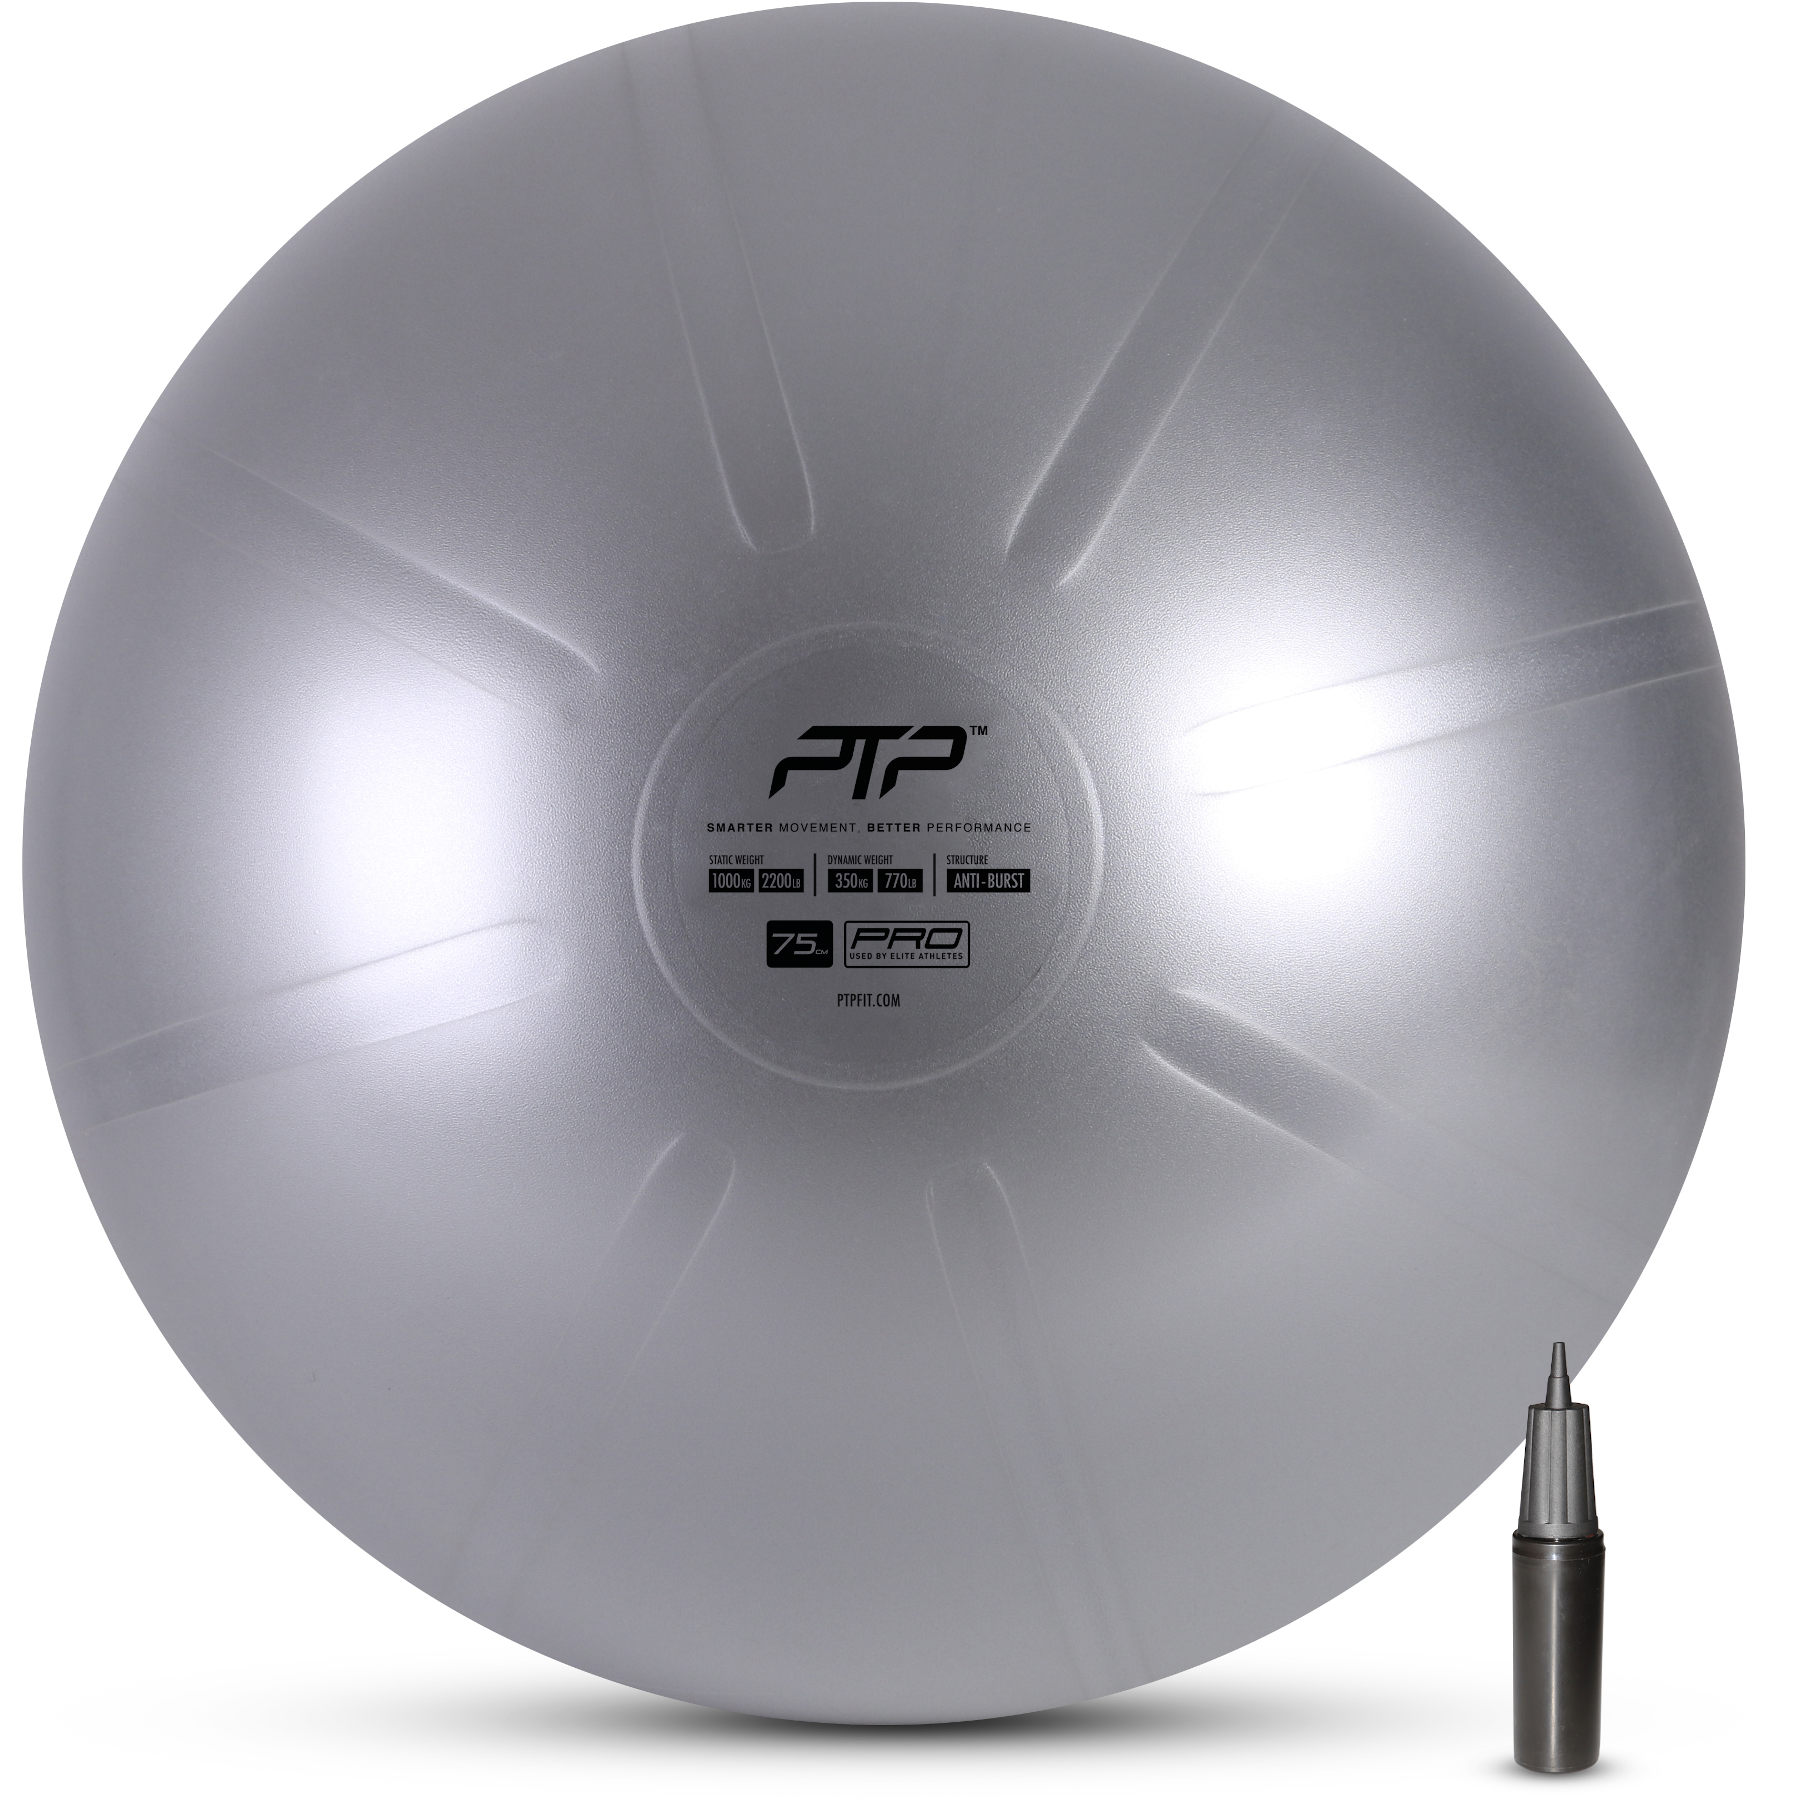 Picture of PTP Coreball 75cm Gymnastics Ball &amp; Pump - steel grey